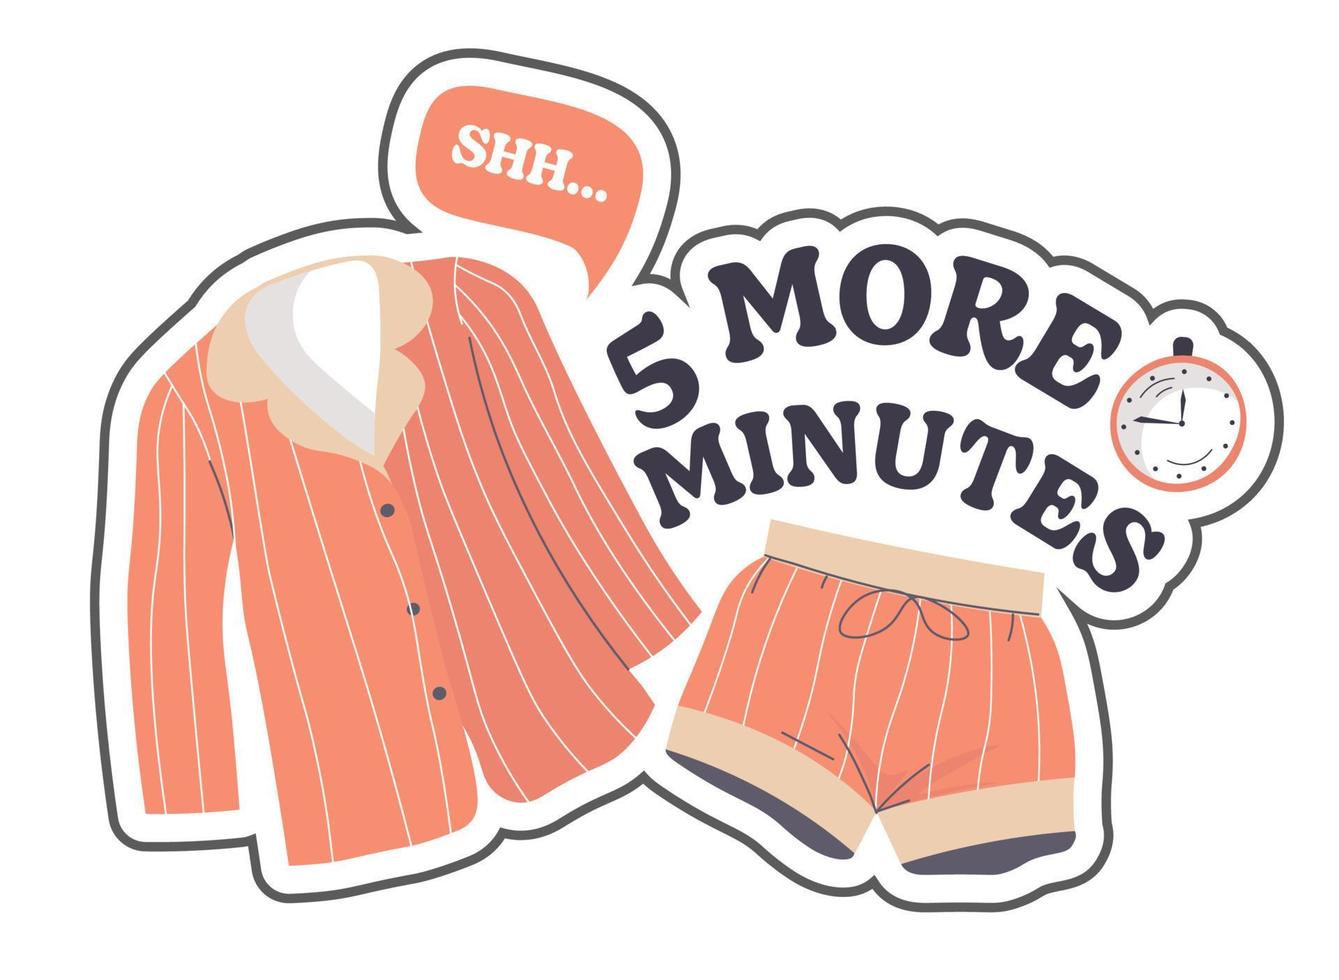 Shh five more minutes, pajamas and clock vector